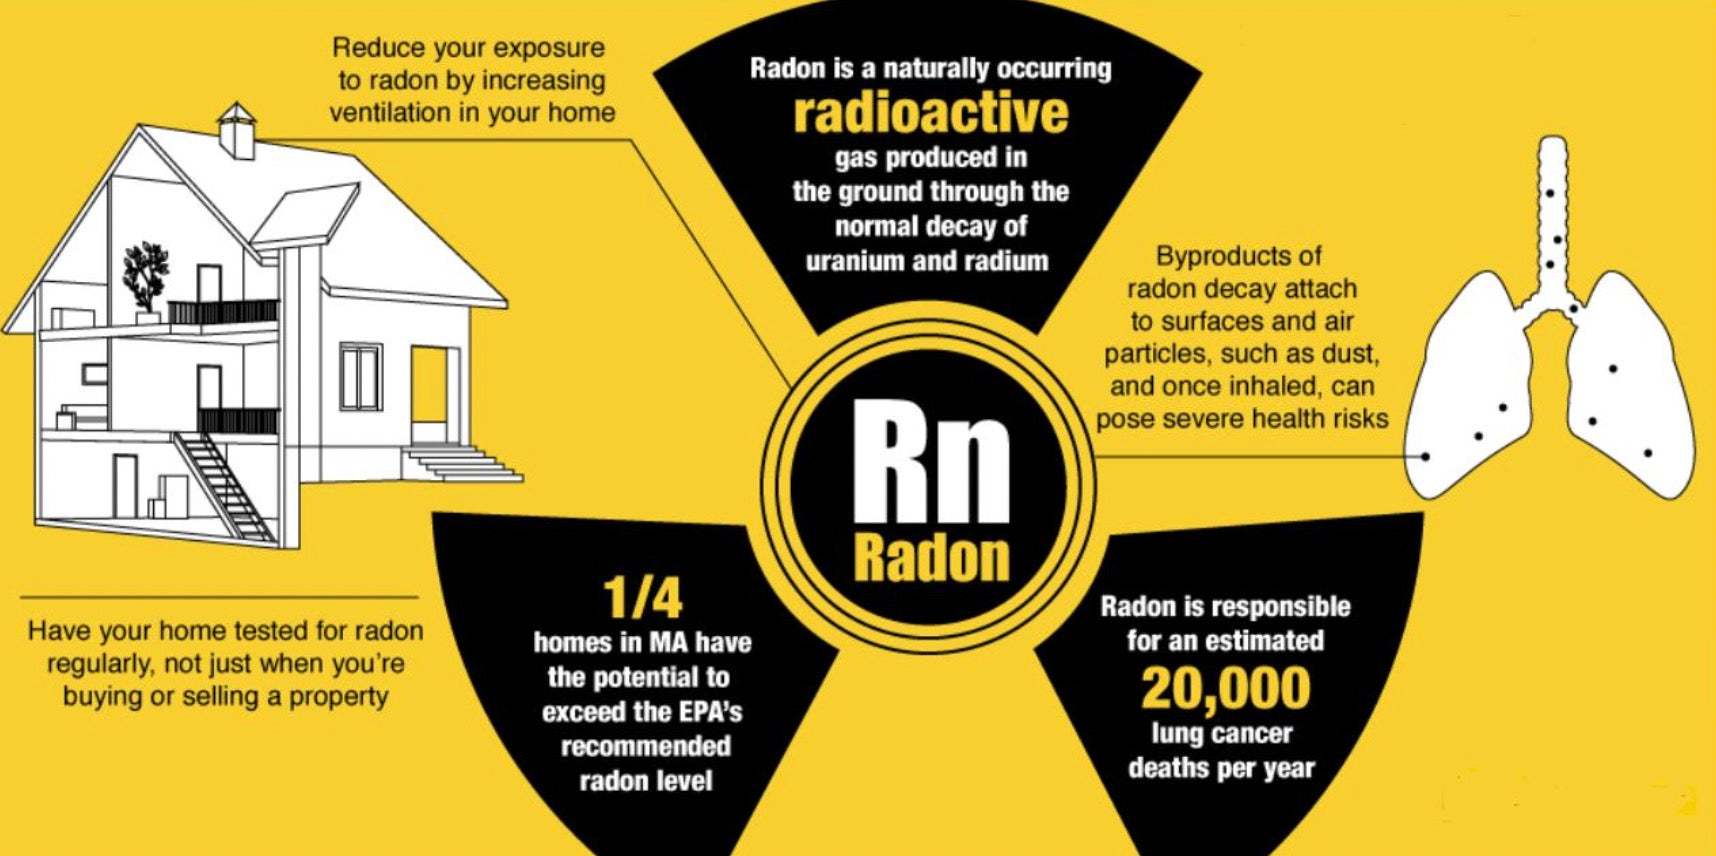 7 Common Radon Myths Debunked